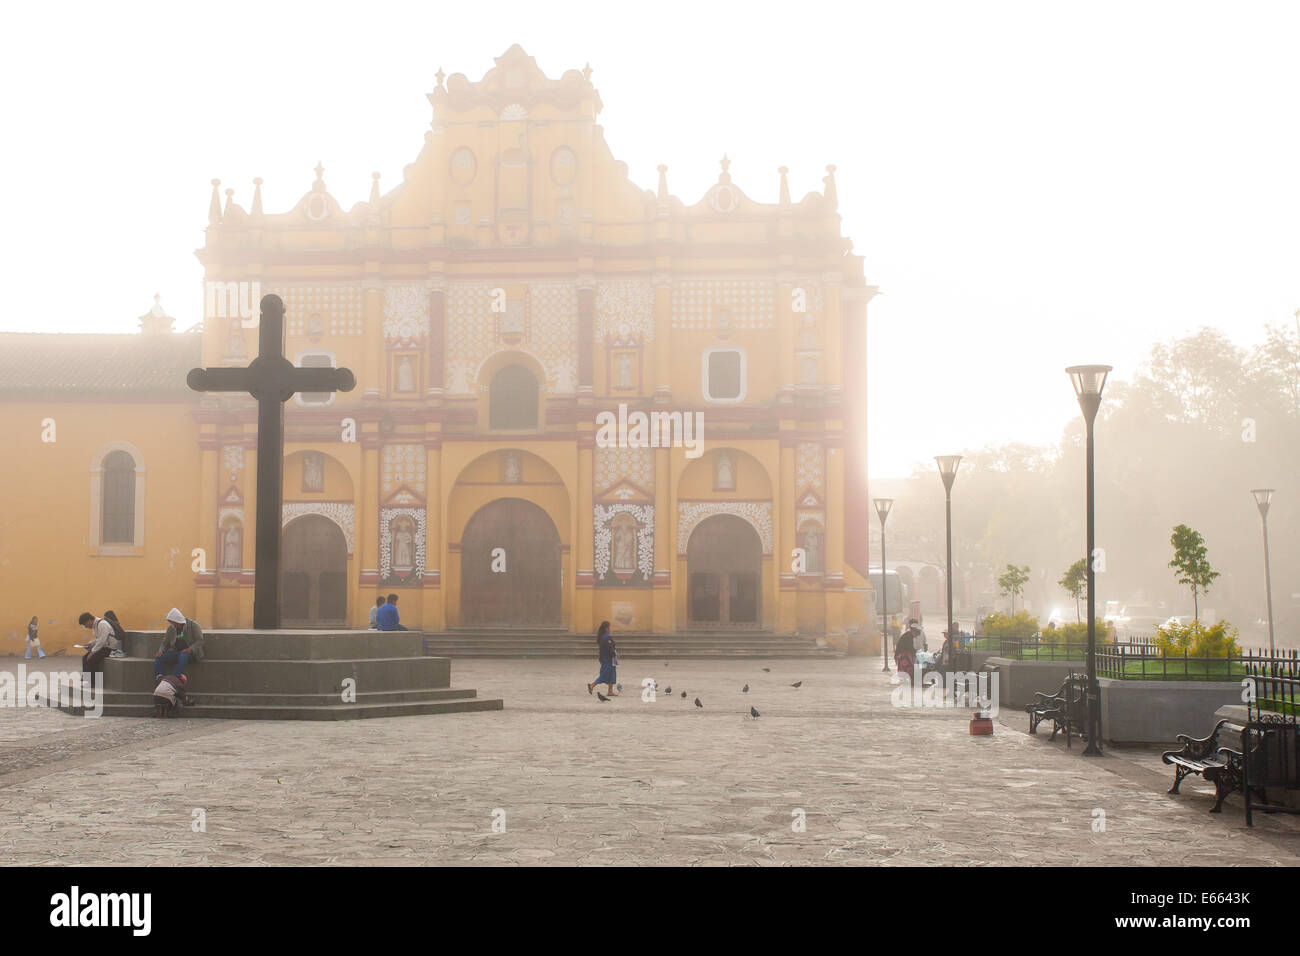 Ein nebeliger Morgen in der Plaza San Cristobal de Las Casas, Chiapas, Mexiko. Stockfoto